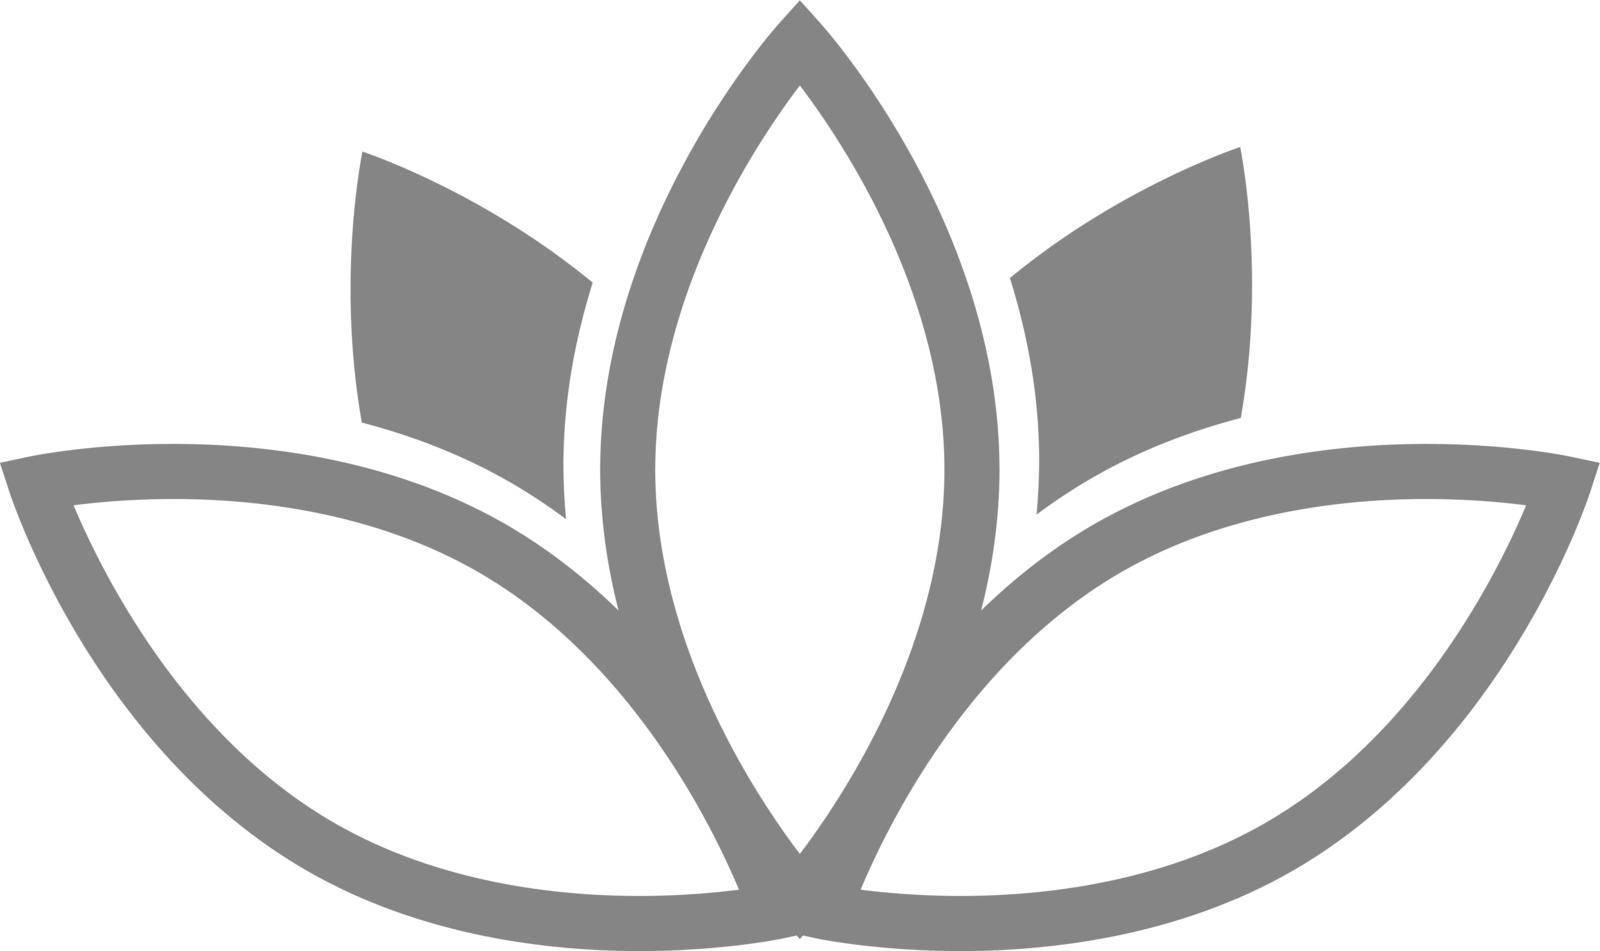 Flower icon. Three petal lotus. Peace symbol by MicroOne